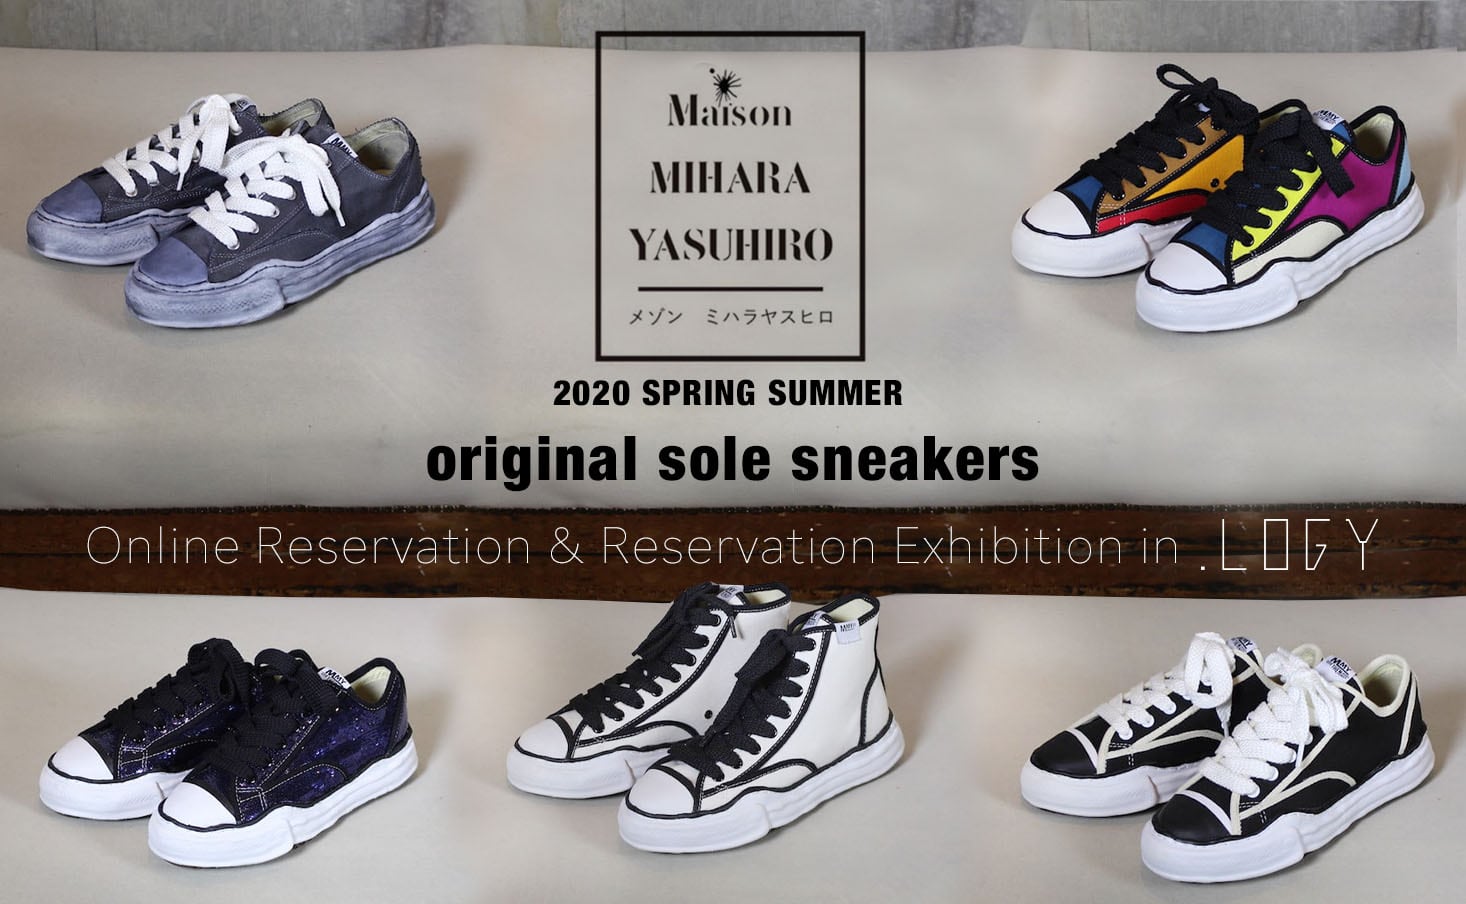 Real Heat for Mini Feet: Sneakers the new modern heirloom? - eBay Inc.